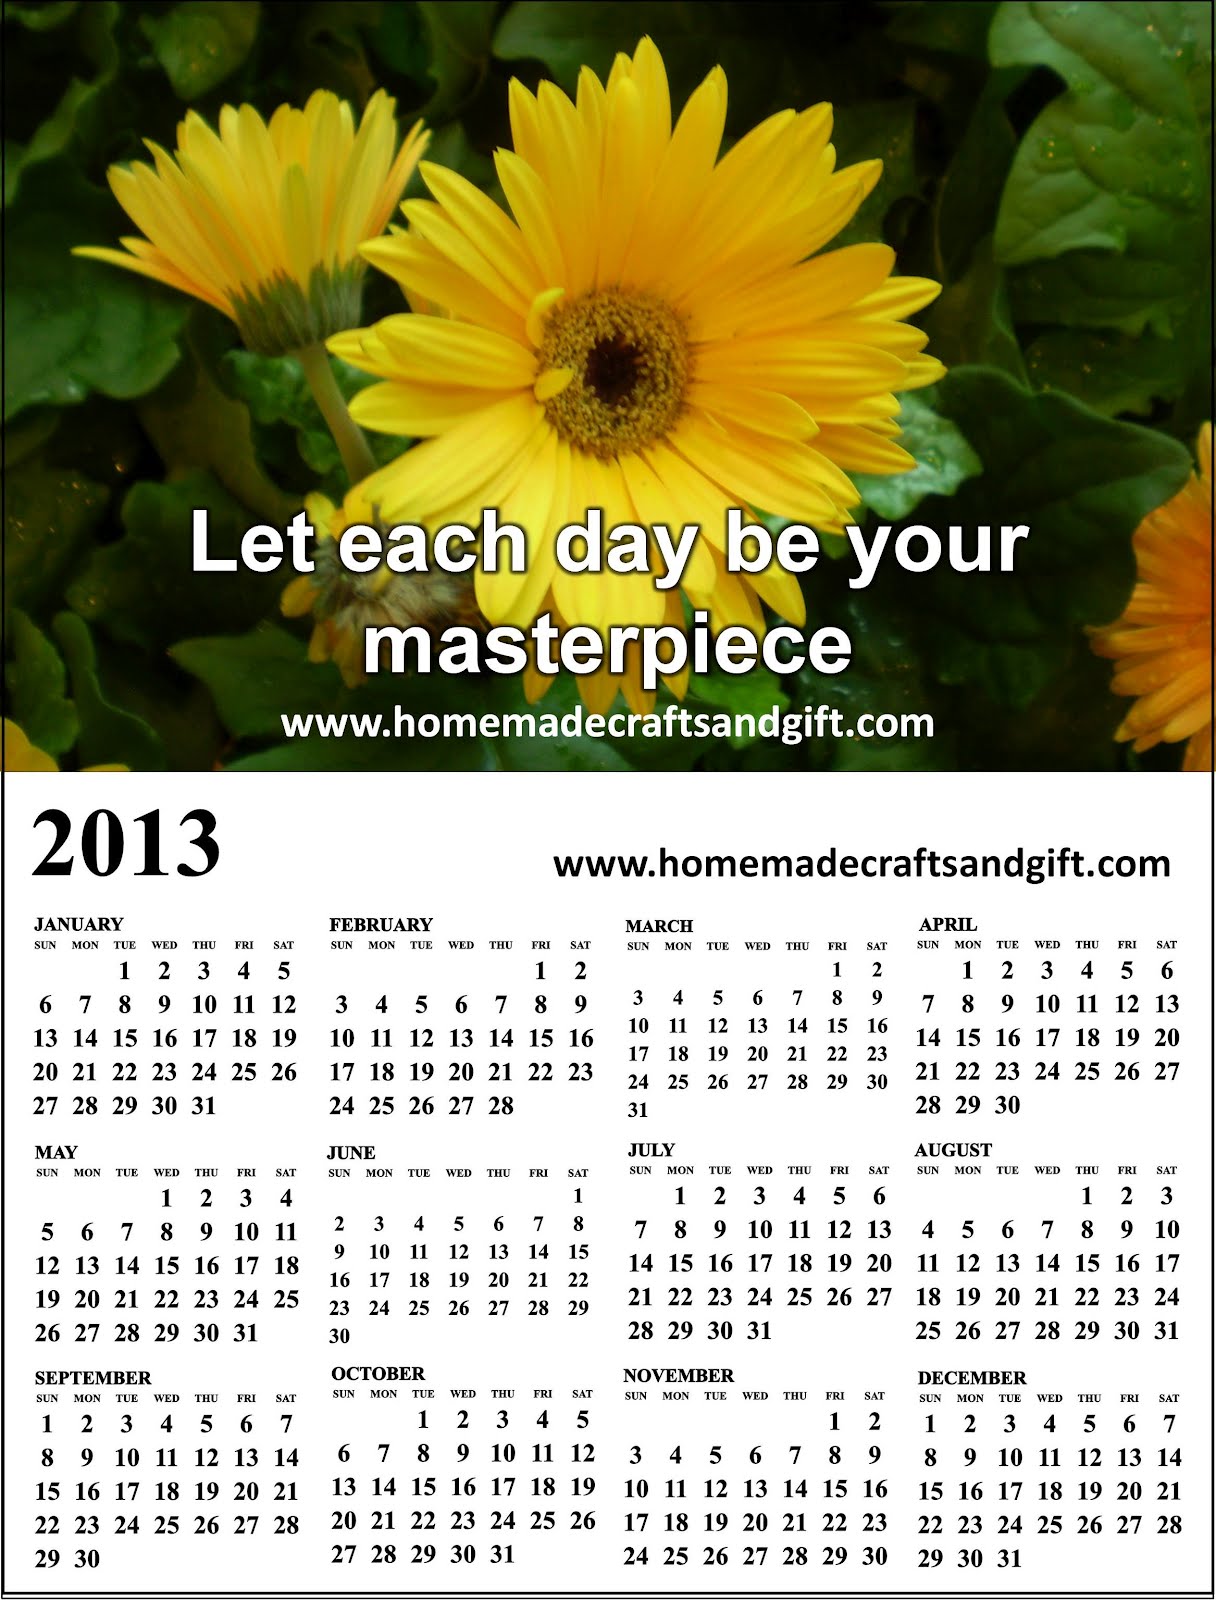 https://blogger.googleusercontent.com/img/b/R29vZ2xl/AVvXsEiDLX64ygJkaWe-XtR7cZnd1Sj37_PuDybuDwV5cFHvt0bjJo87UeOMZ5n98j7YNfljj00zFPwCTLapZEJ2FmSRAEXvgMndIs2X2DjfRMuDQvEmDO1FNiUeHmALeWD49Pw3WQpnY8YmSrw/s1600/HM2+Wallpaper+2013+Calendar+picture.jpg